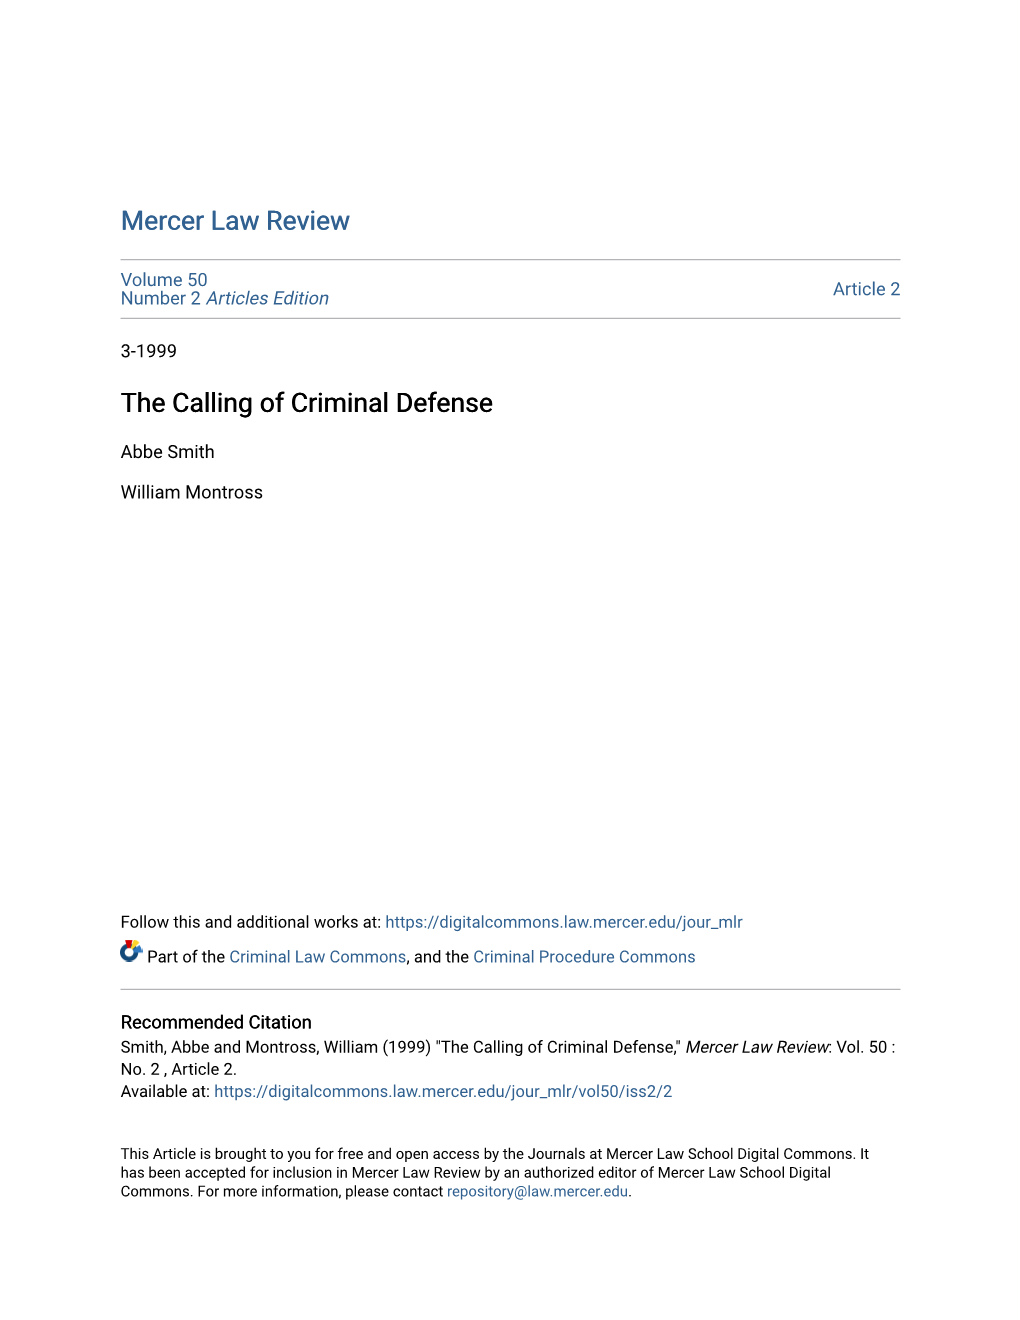 The Calling of Criminal Defense